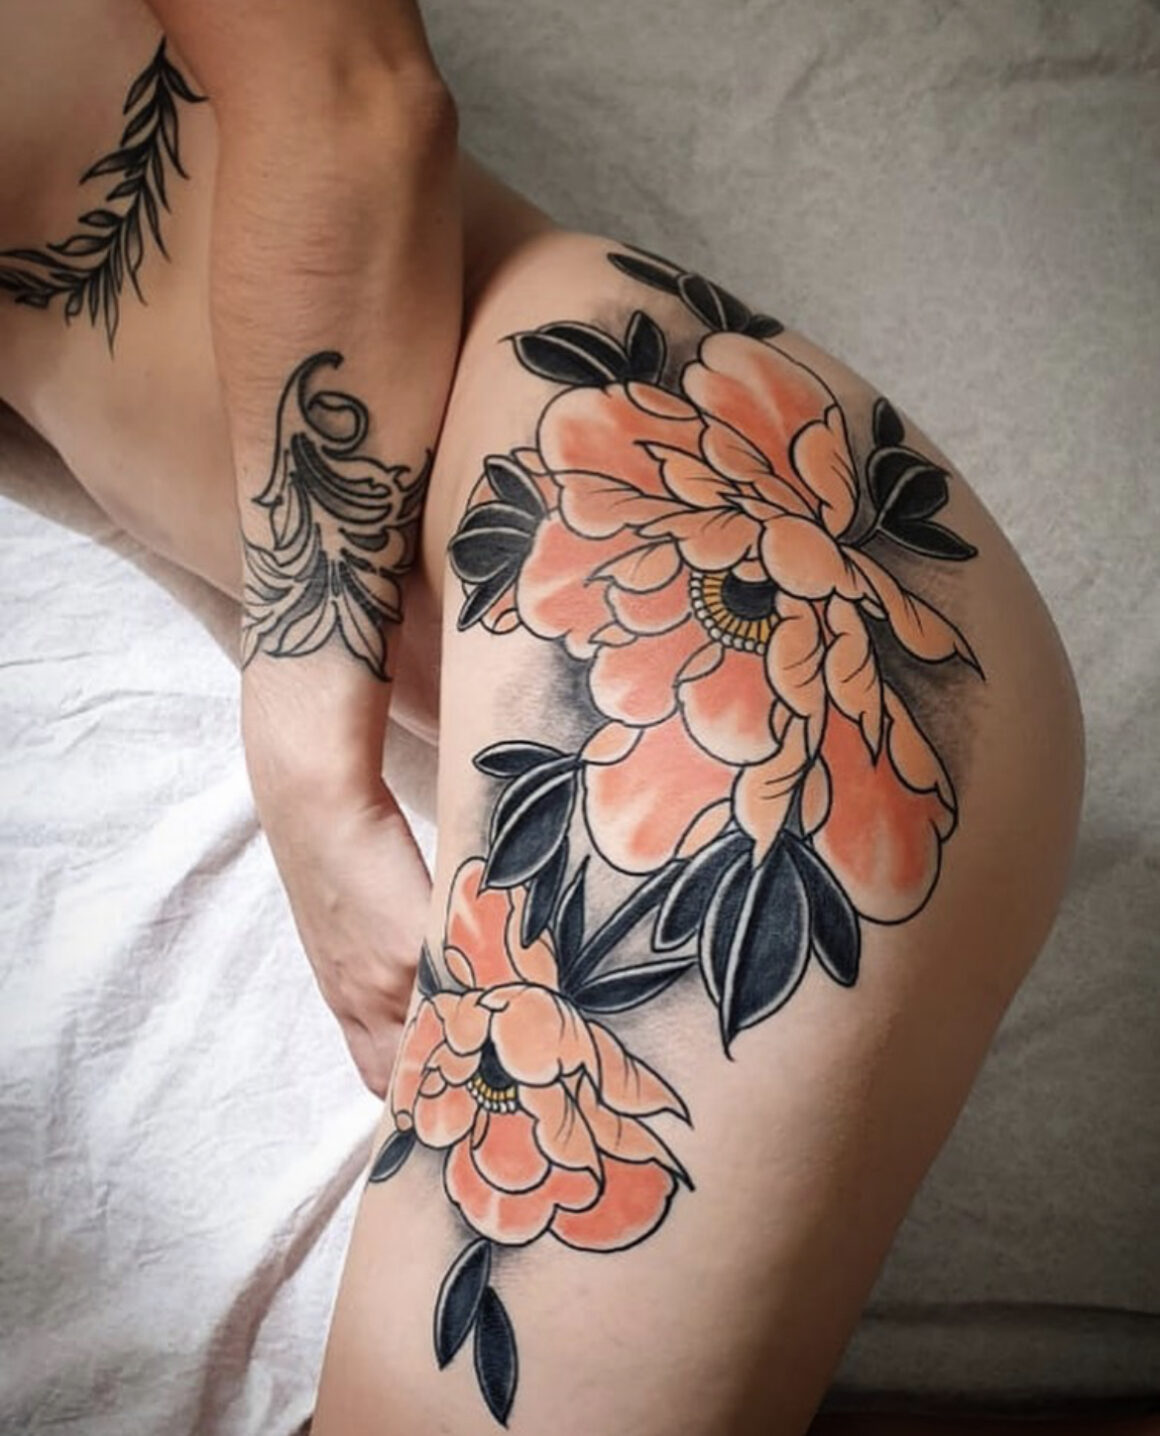 Flash Tattoos | Cherry blossom temporary tattoo – The Flash Tattoo